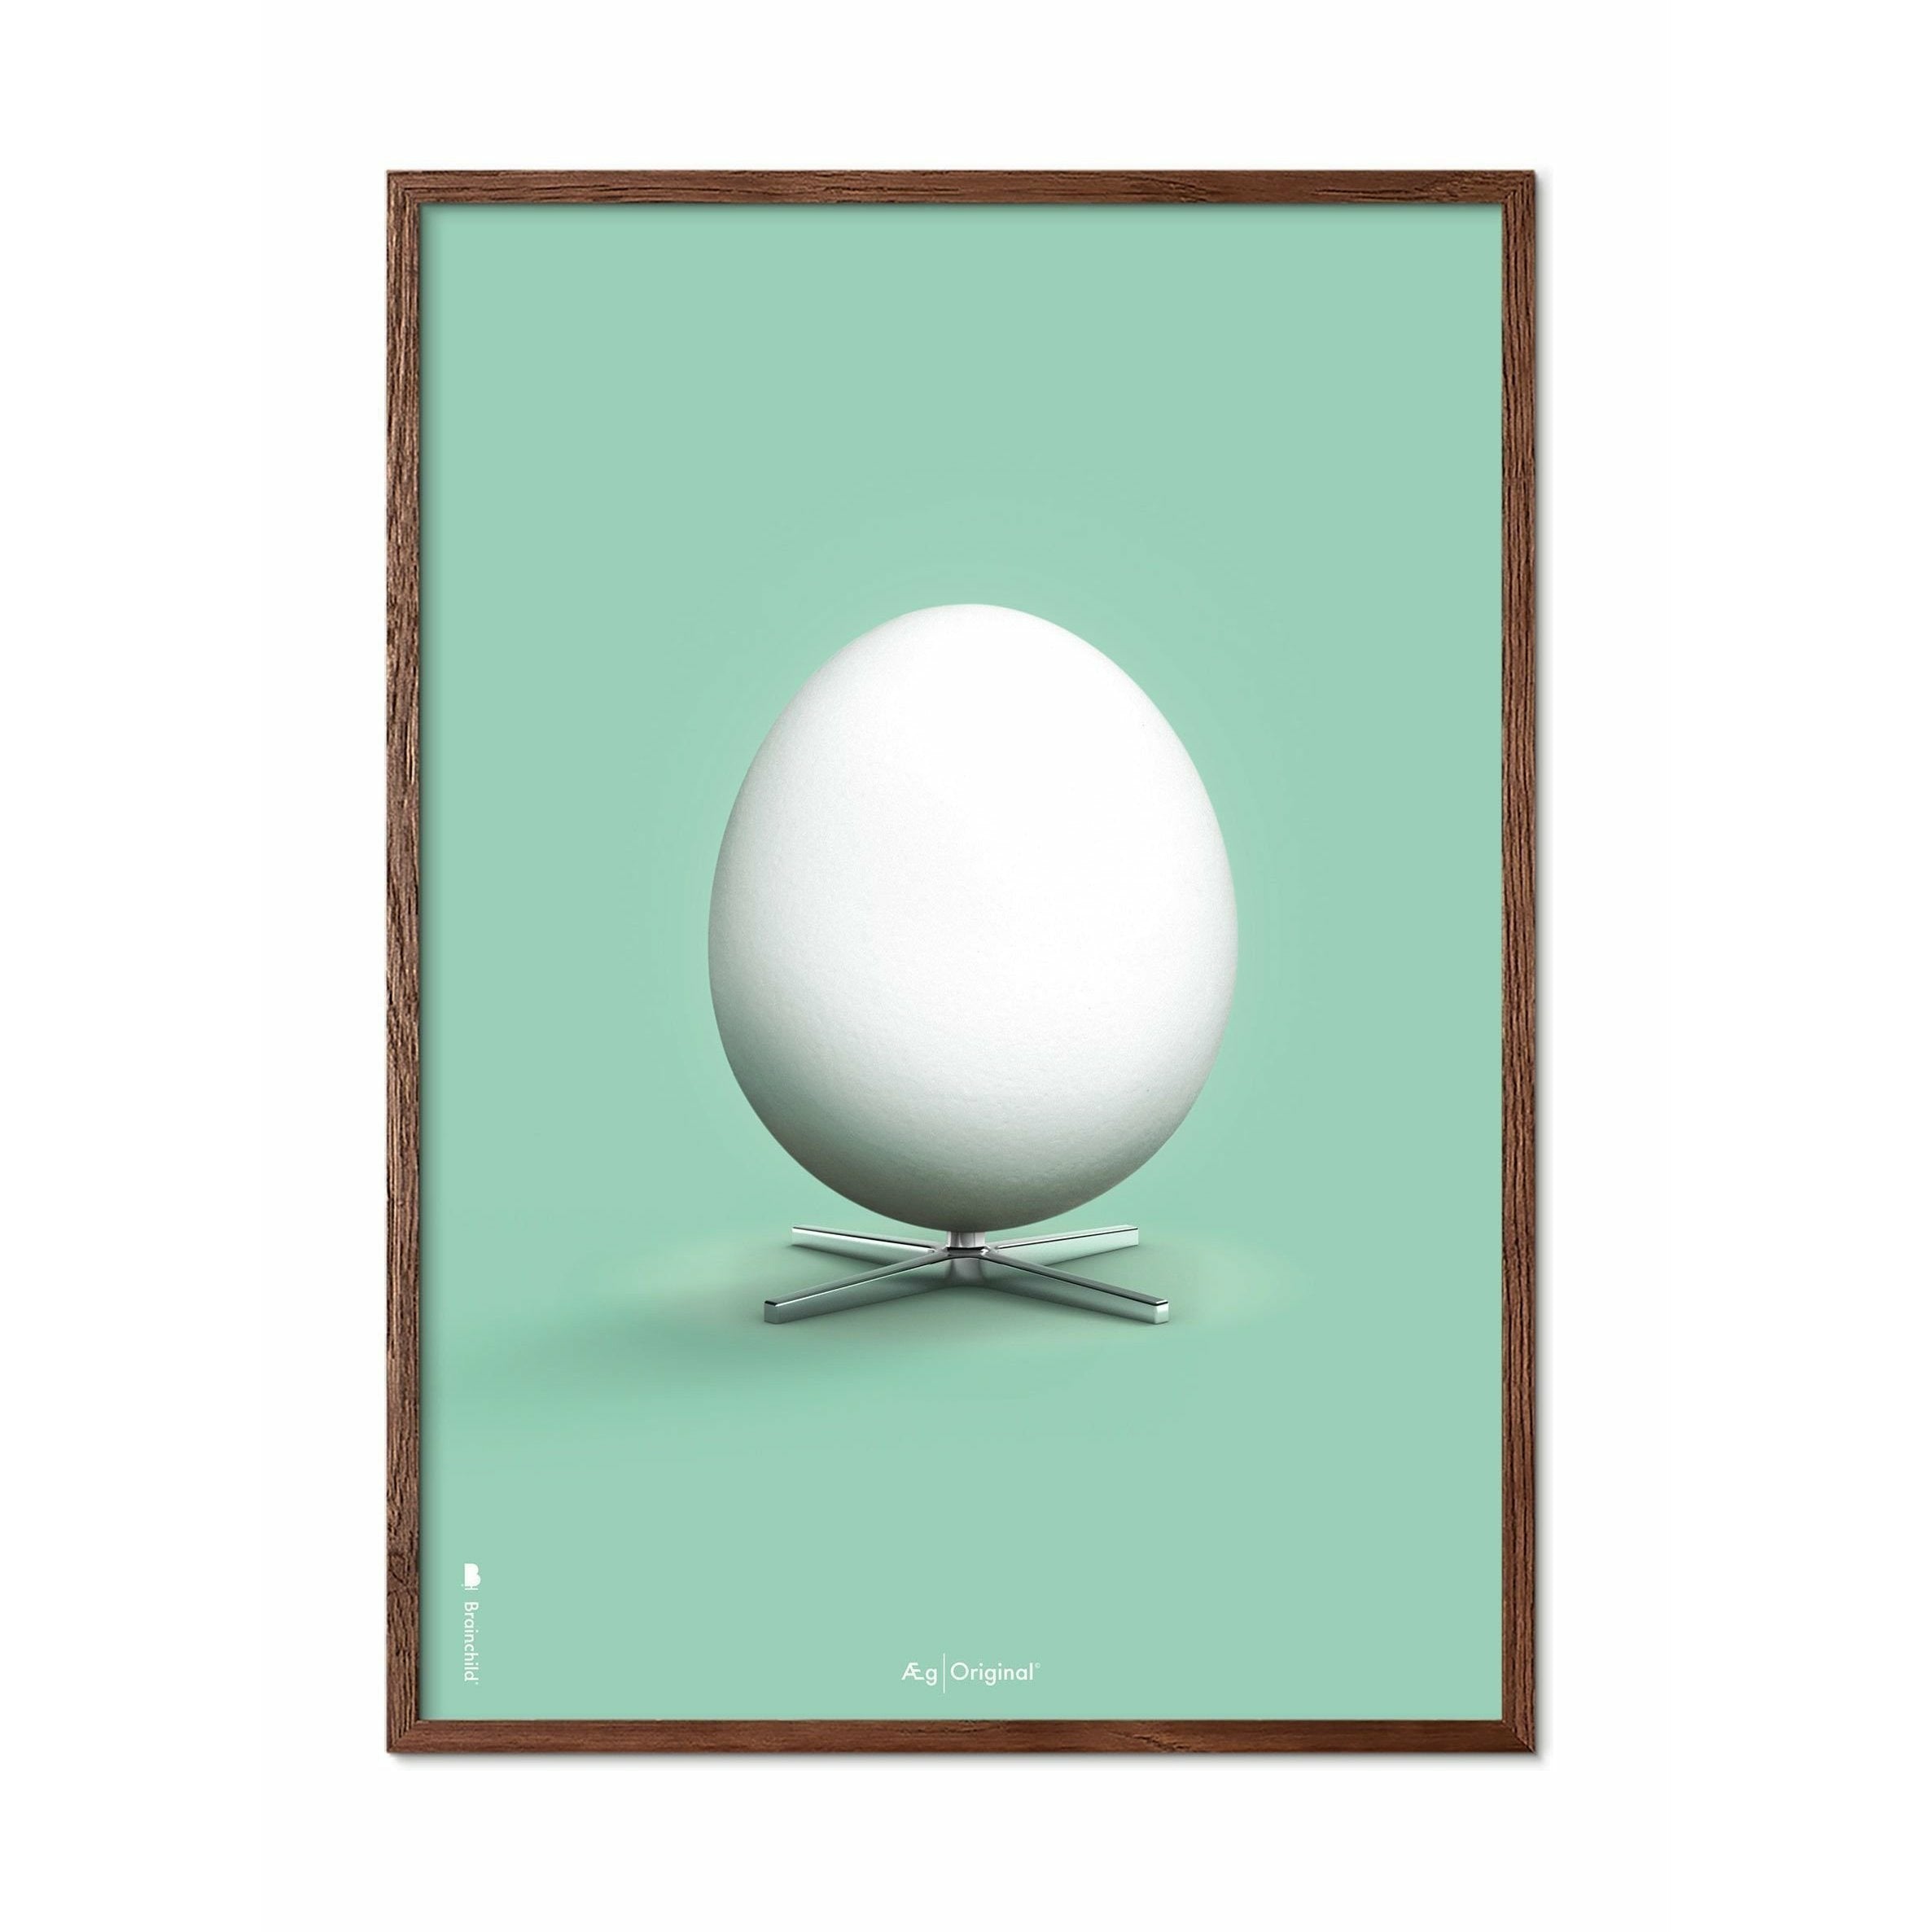 Brainchild Egg Classic Poster, Frame Made Of Dark Wood 70x100 Cm, Mint Green Background